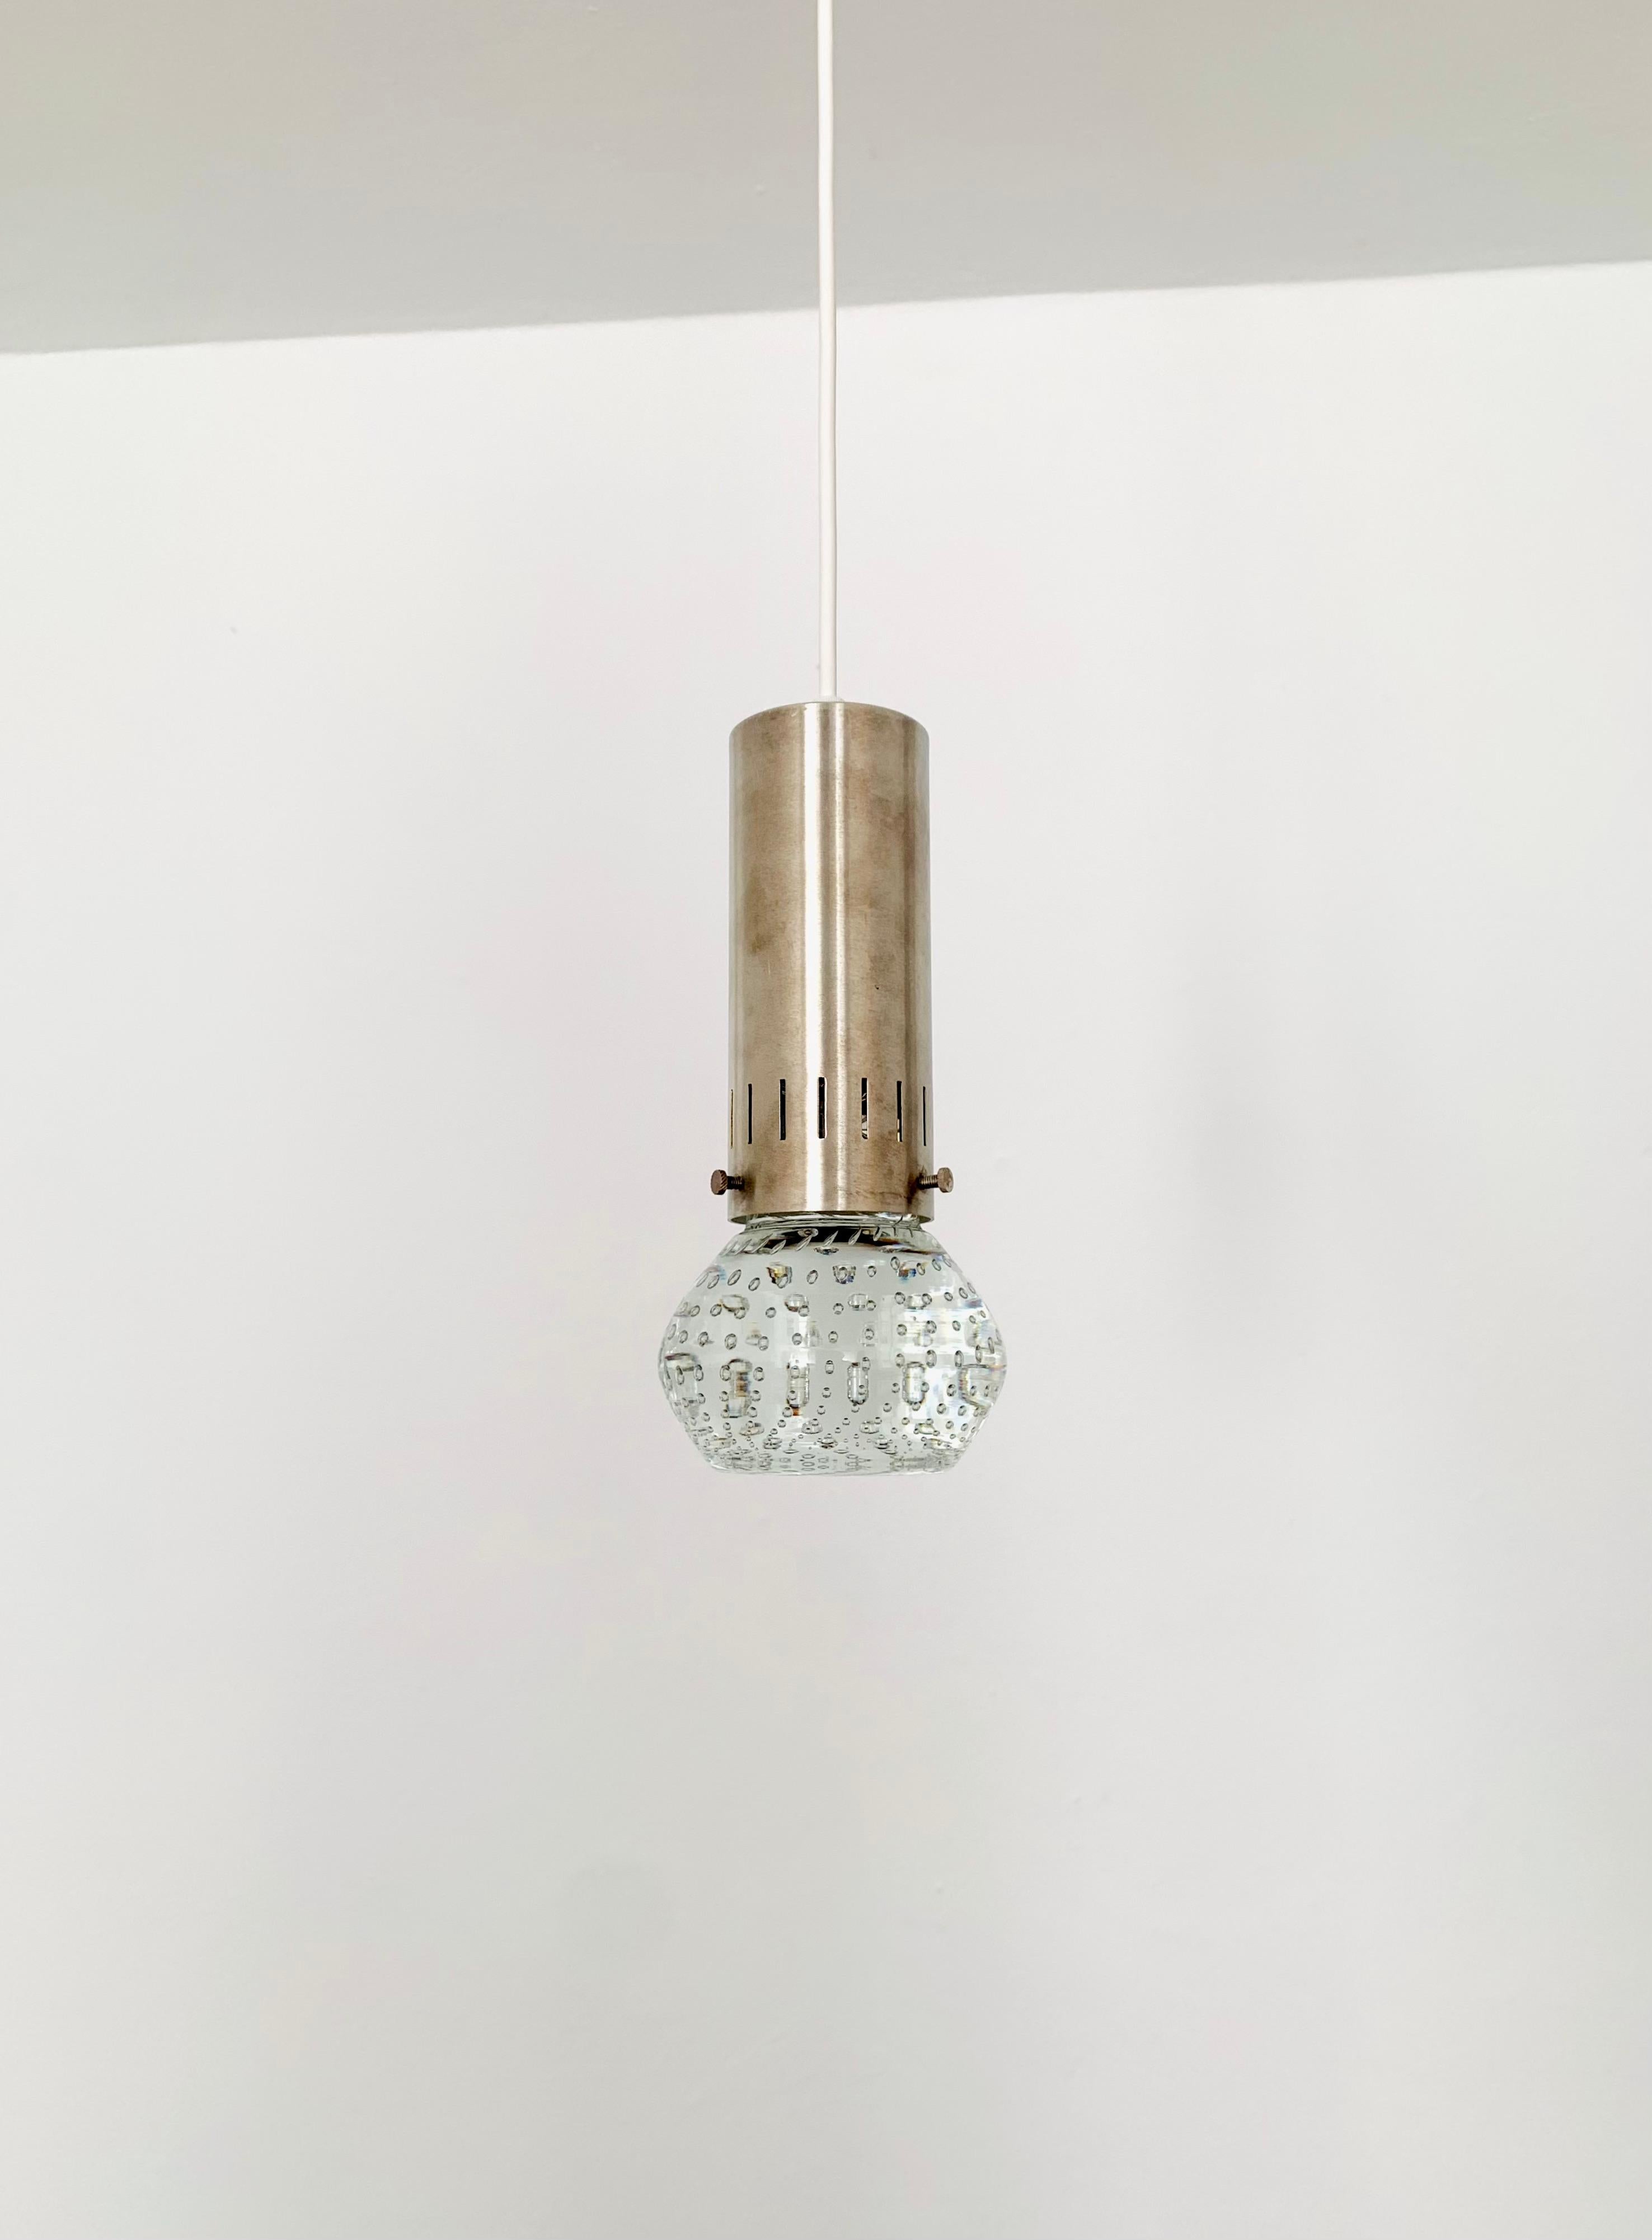 Italian Set of 2 Seguso Glass Pendant Lamps by Gino Sarfatti for Arte For Sale